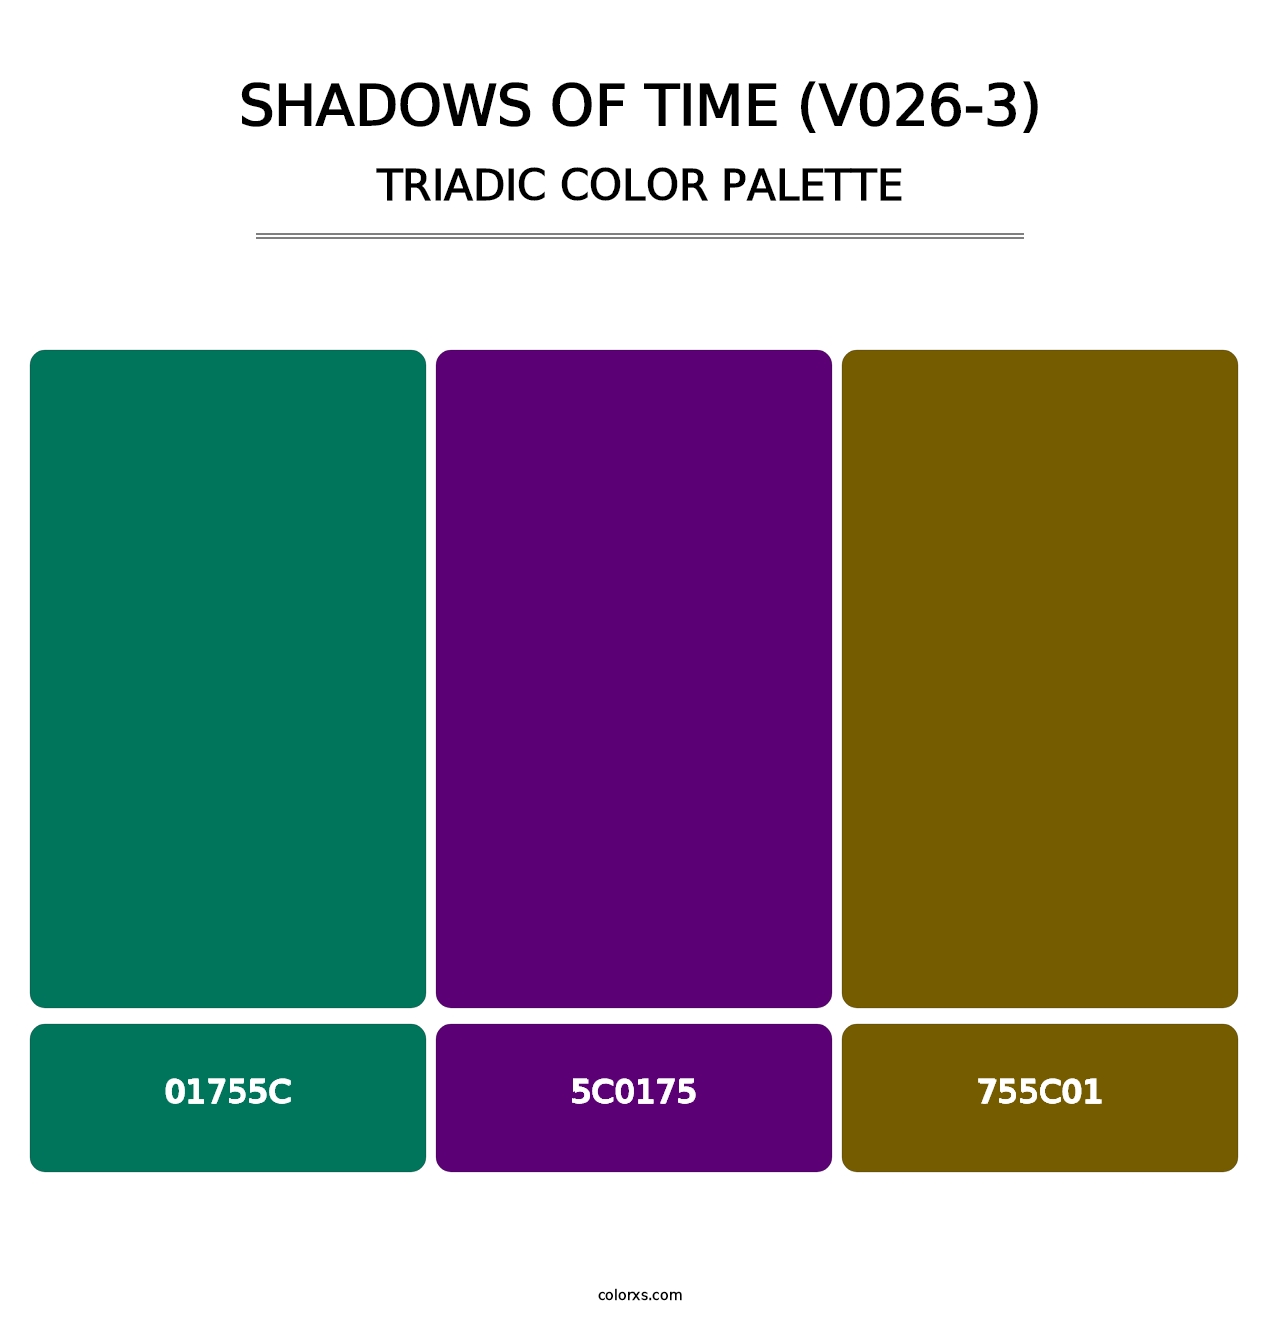 Shadows of Time (V026-3) - Triadic Color Palette